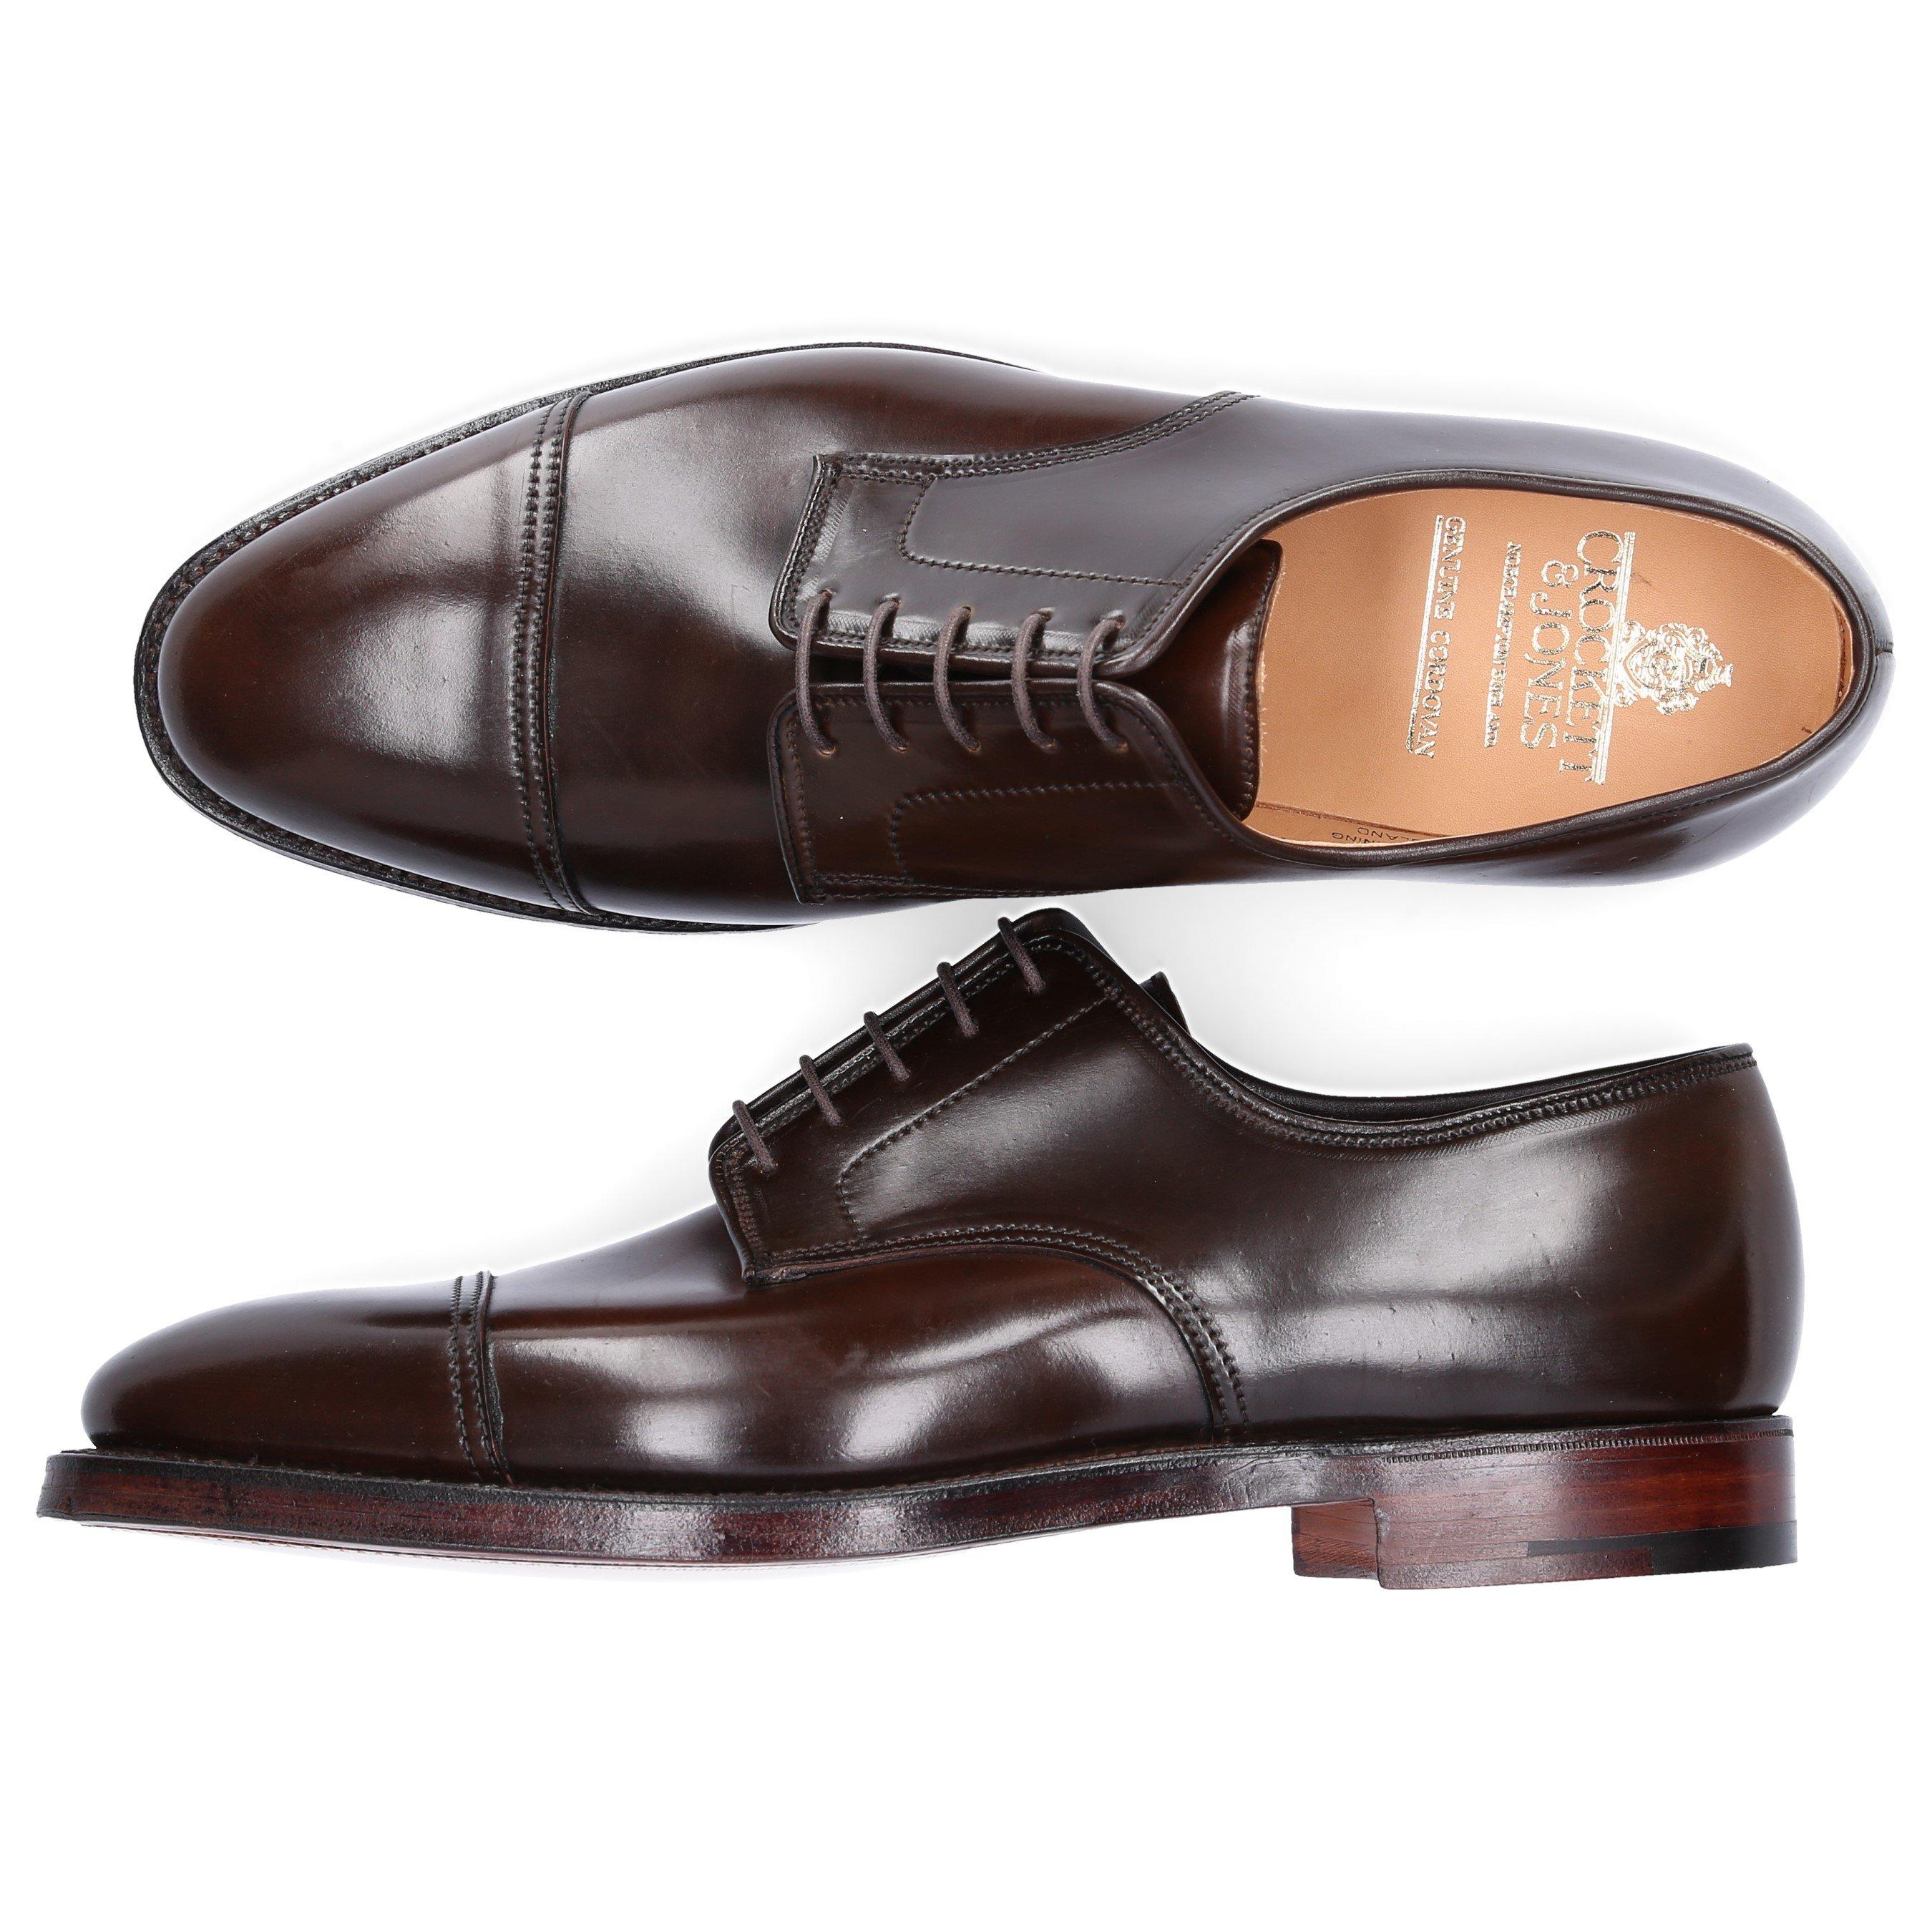 Crockett & Jones Business Shoes Derby Empire Cordovan Leather in